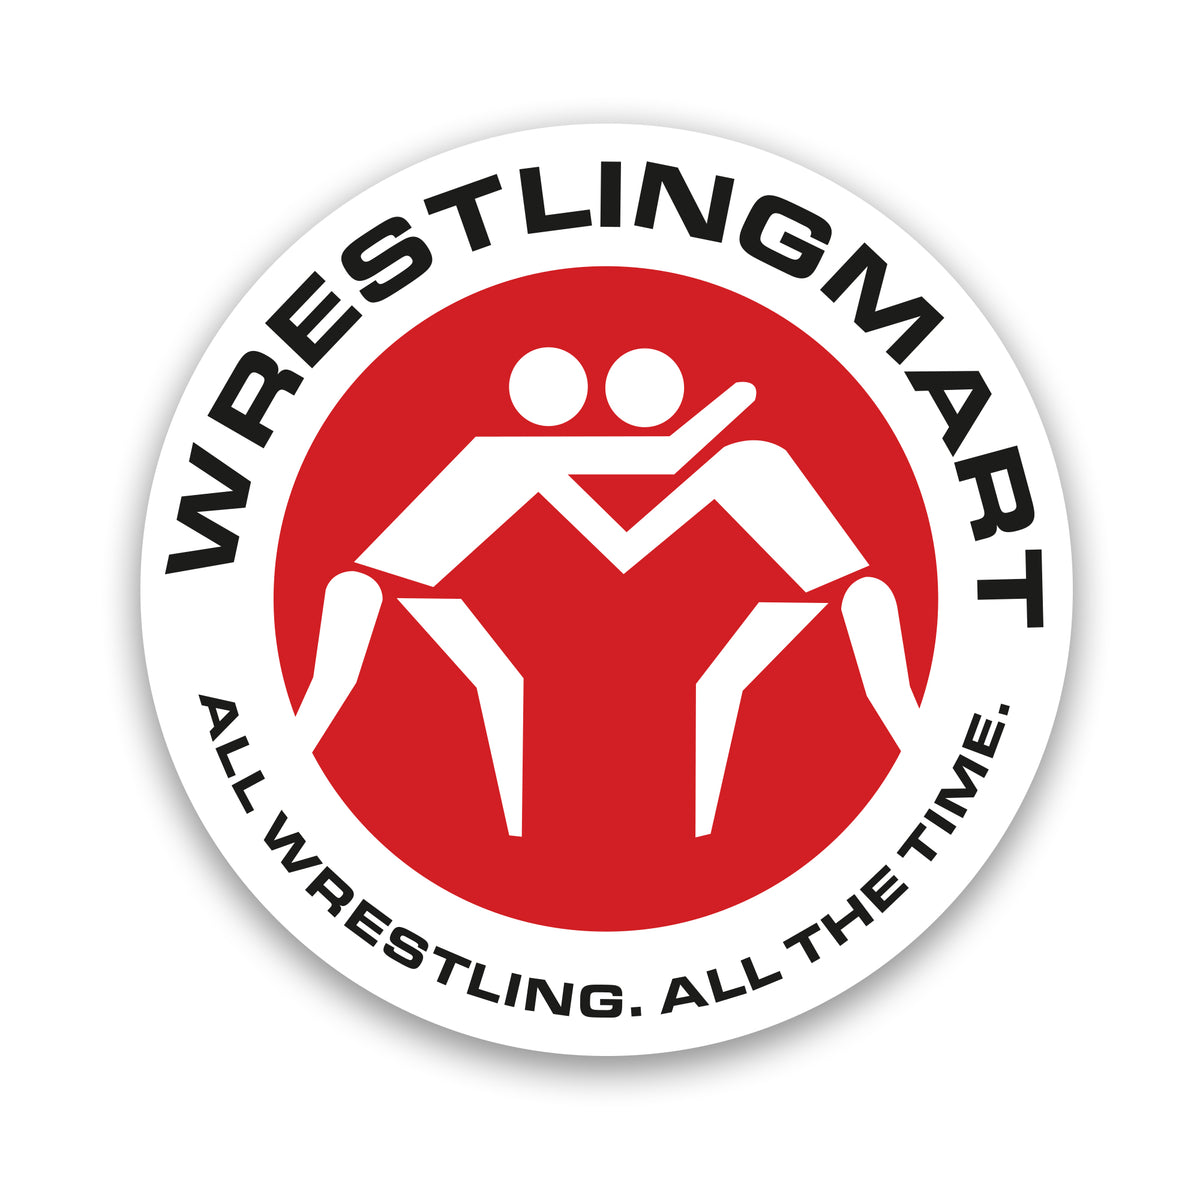 wrestling Sticker for Sale by sarimart